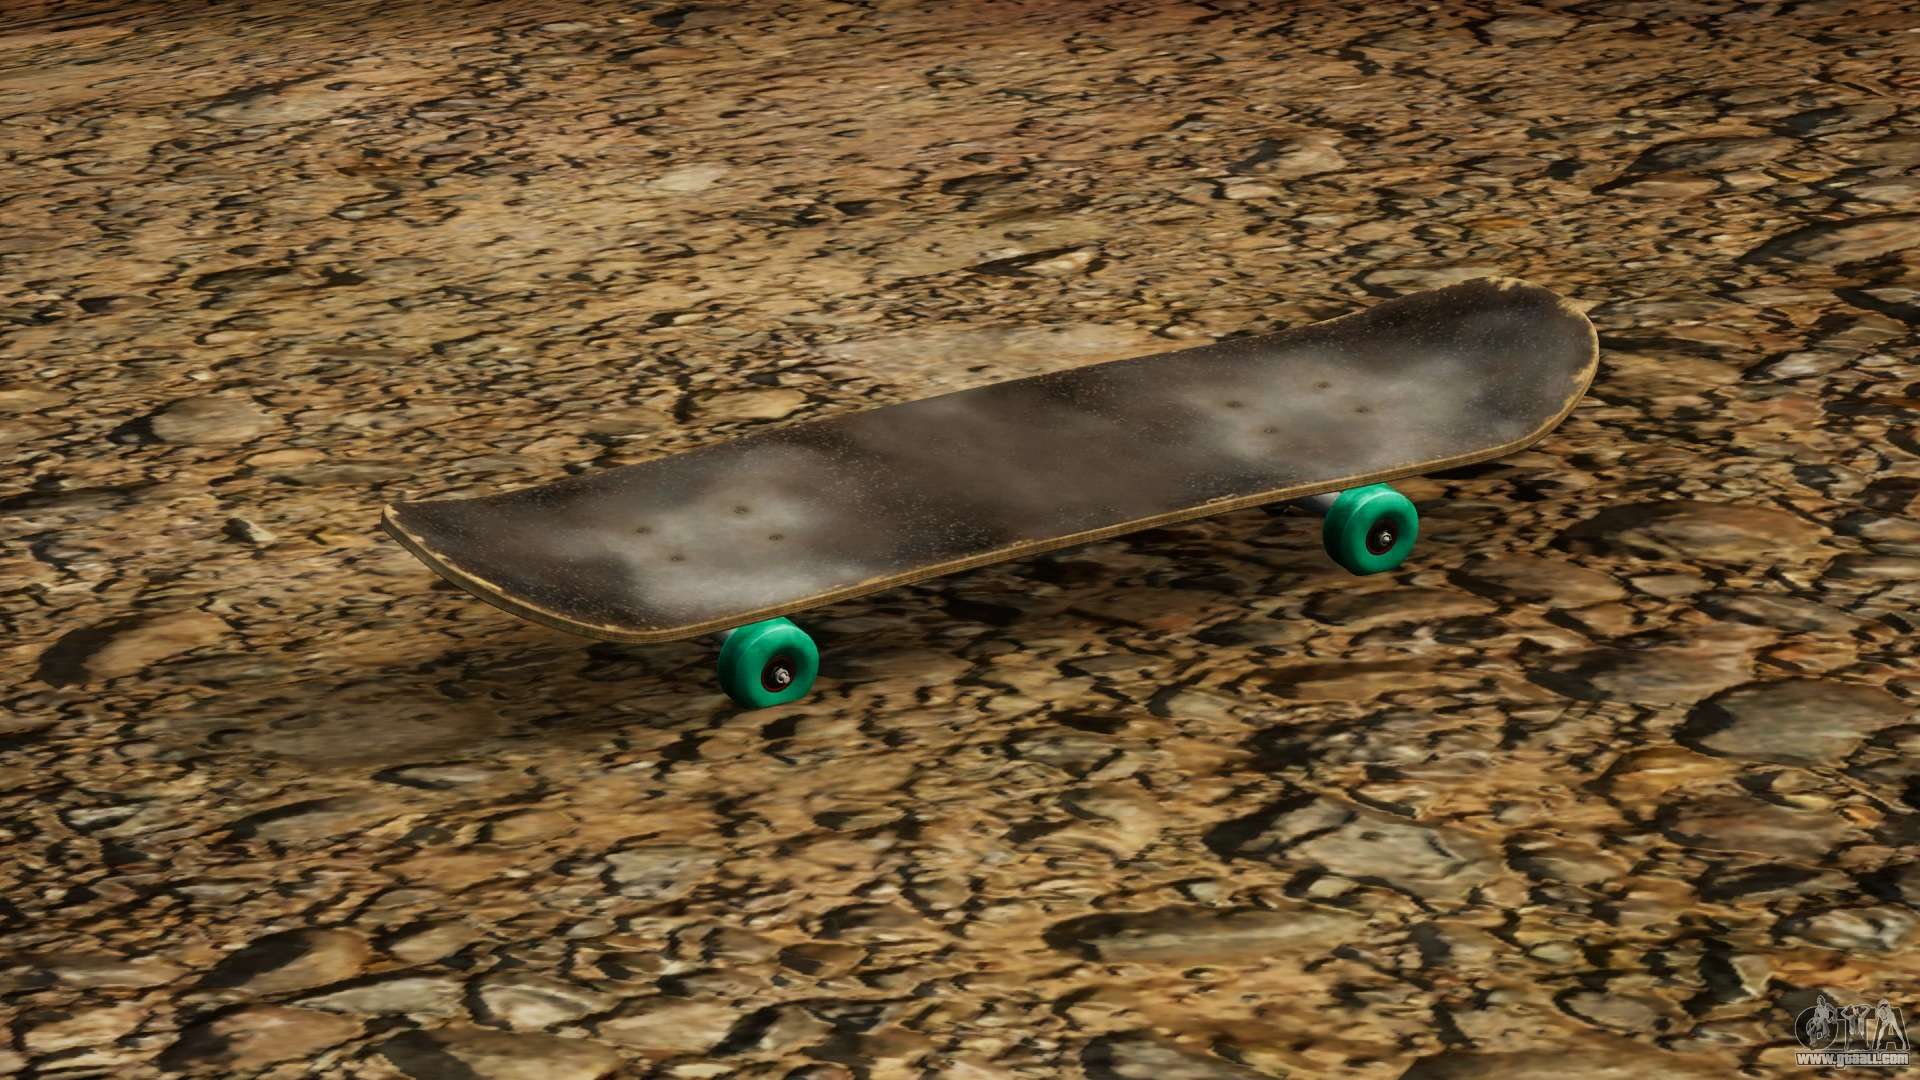 Skateboard (BETA Restore) for GTA San Andreas